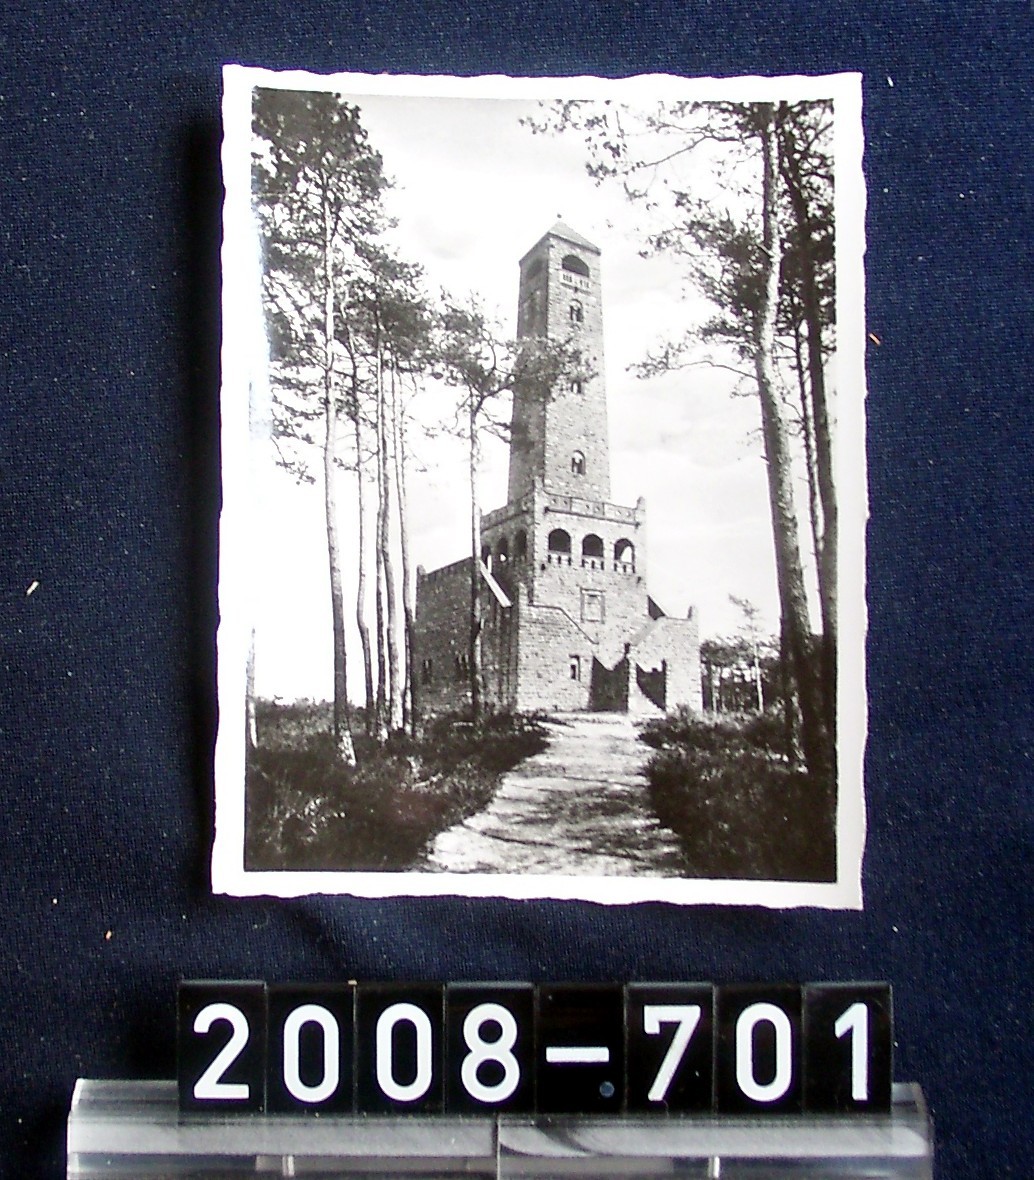 S-W-Foto von Bad Dürkheim; Bismarckturm auf dem Peterskopf; aus Nachlass der Sektkellerei Freudenmacher, Wachenheim; um 1920 (Stadtmuseum Bad Dürkheim, Museumsgesellschaft Bad Dürkheim e.V. CC BY-NC-SA)